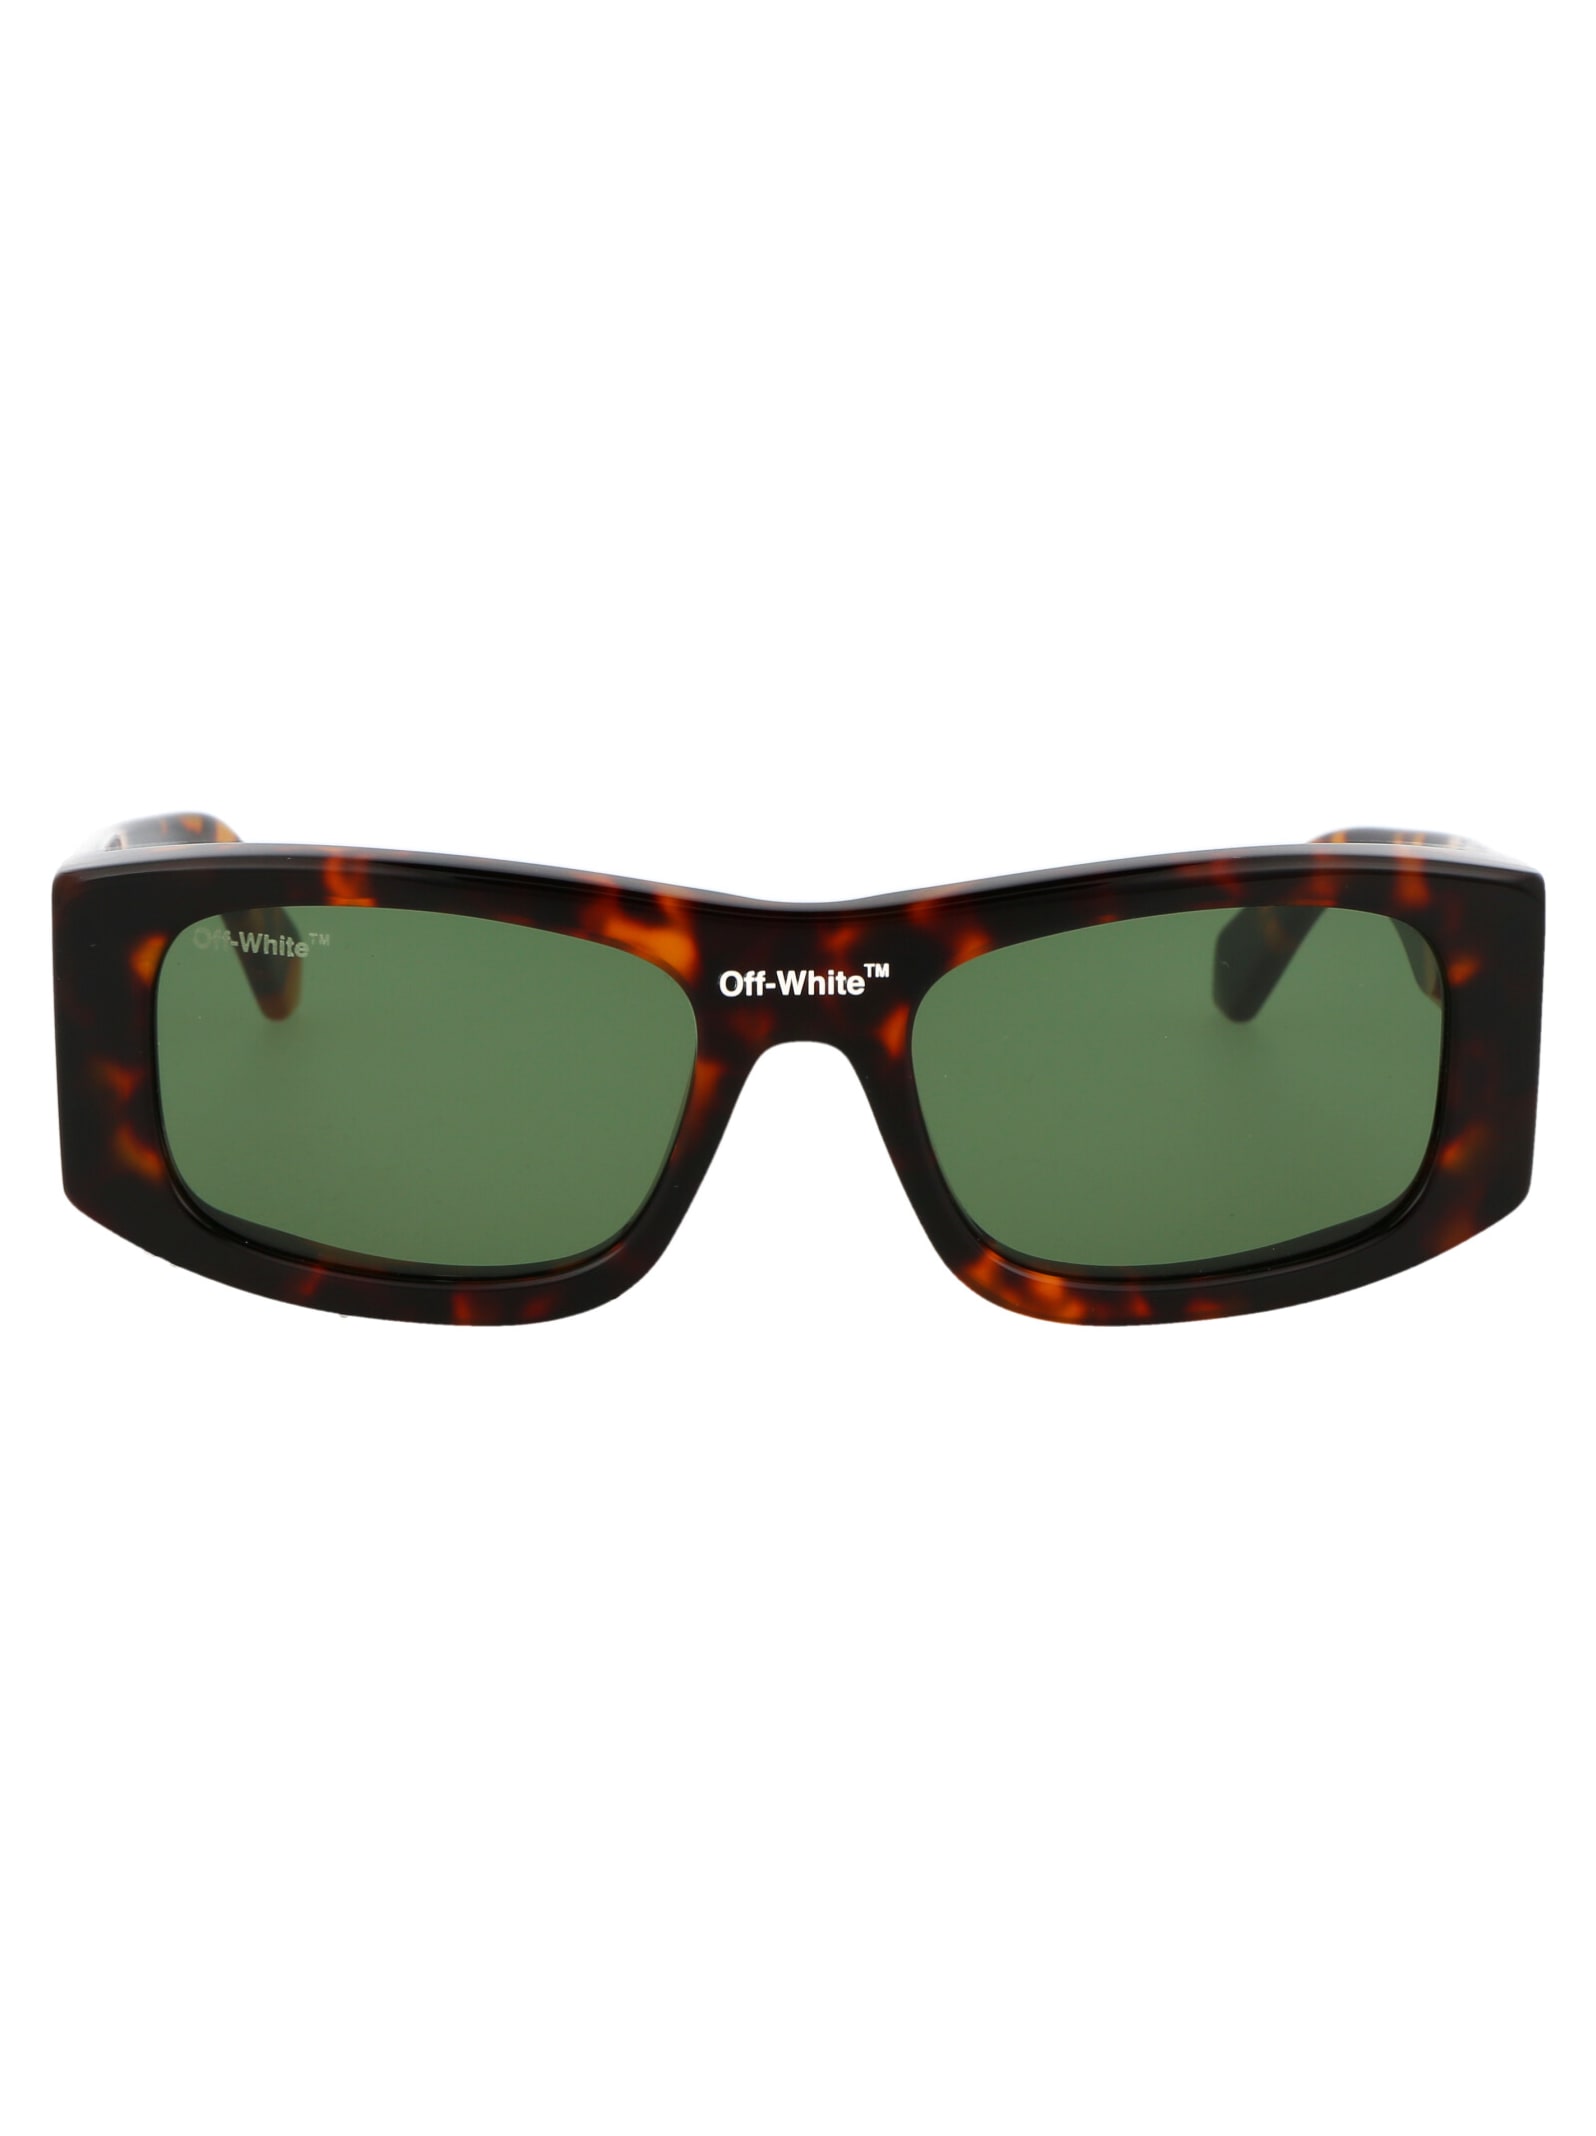 Off-White Lucio Sunglasses